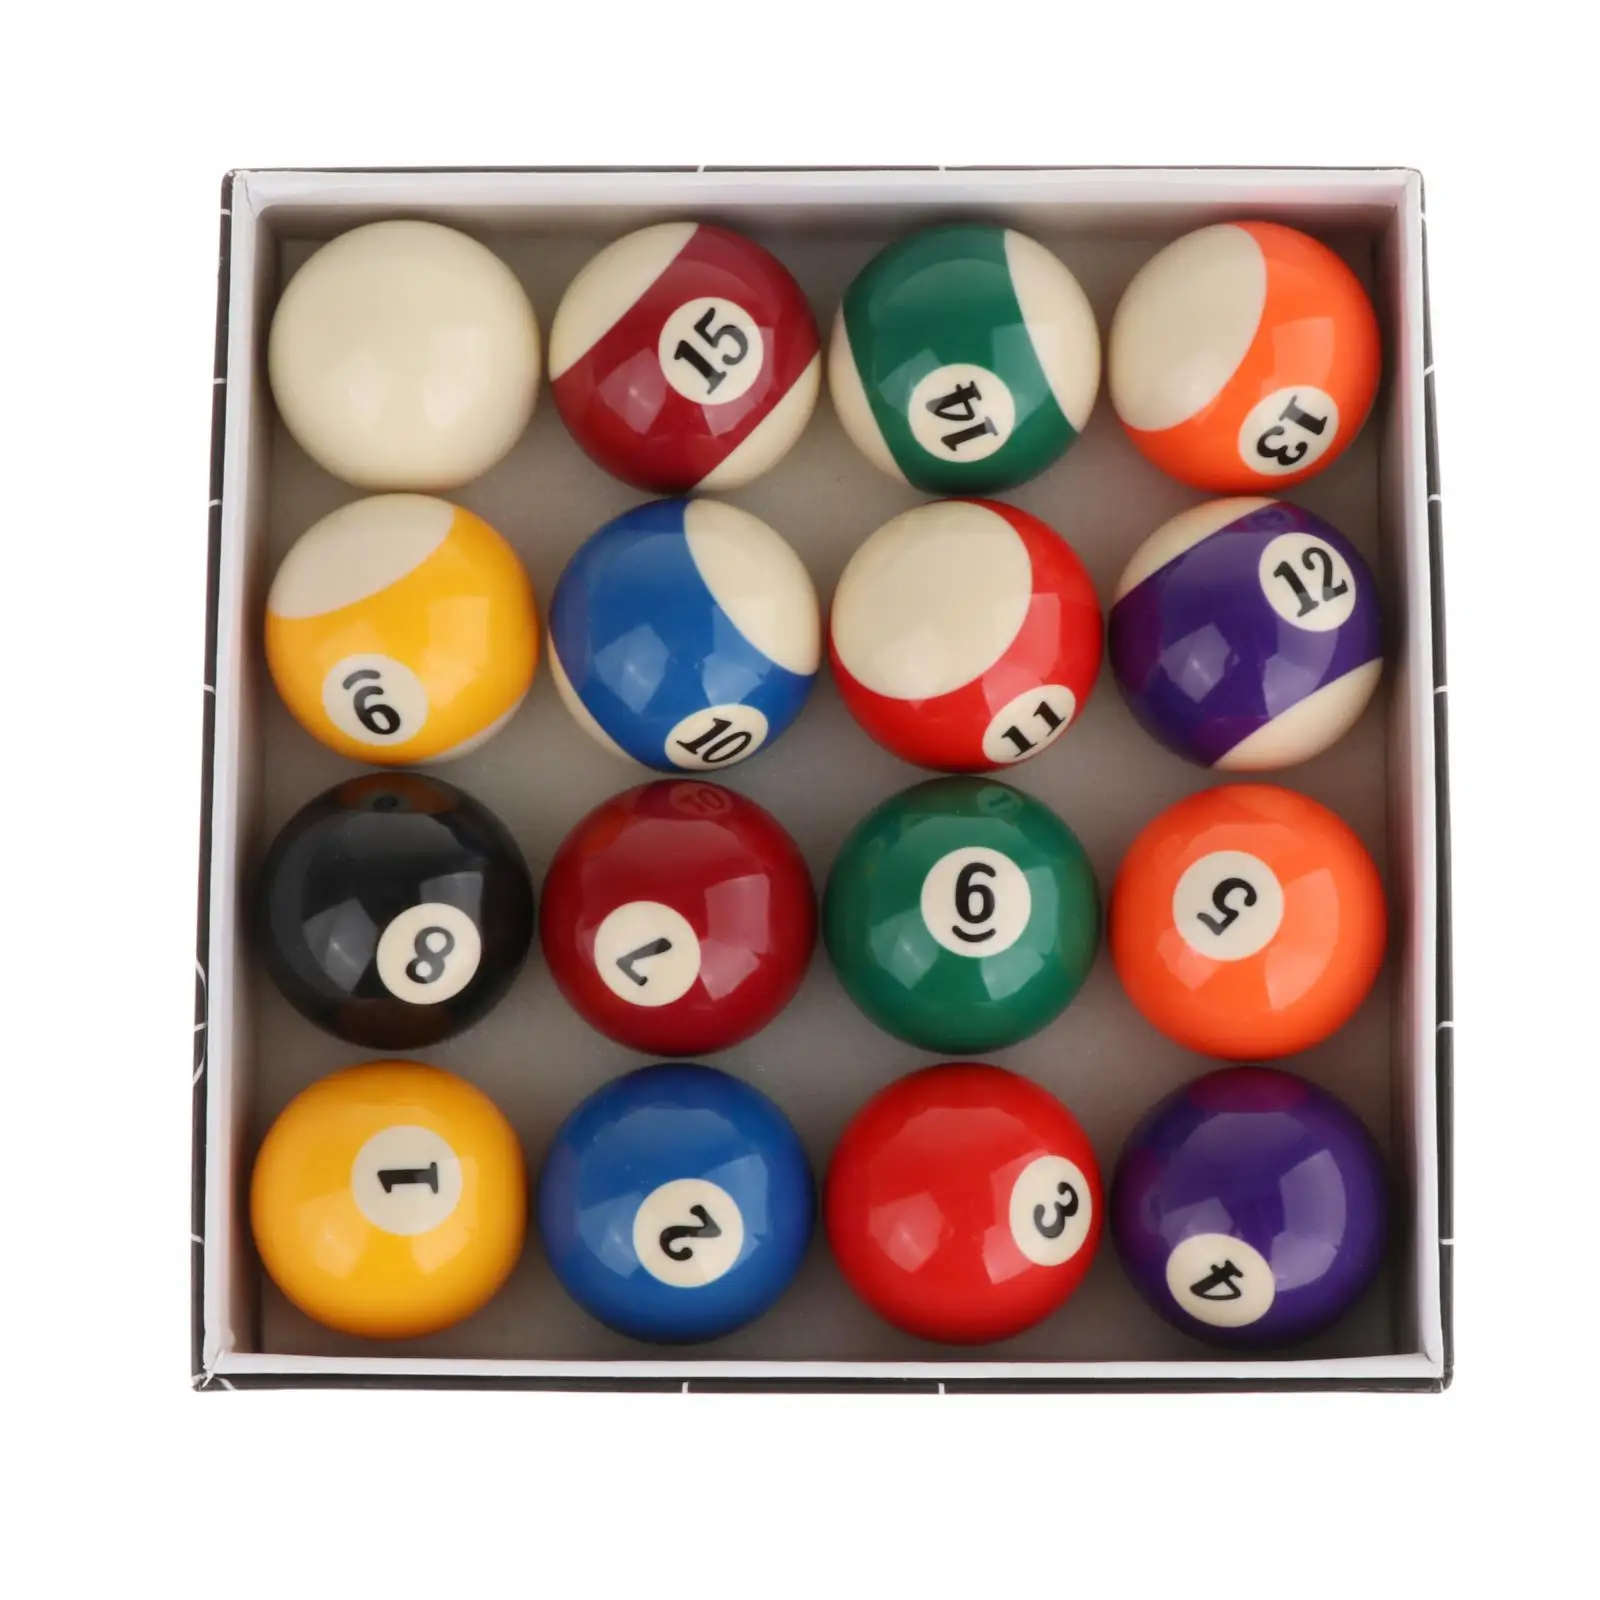 16x Billiard Balls Durable Billiards Pool Ball Set for Hotels Playroom Bars